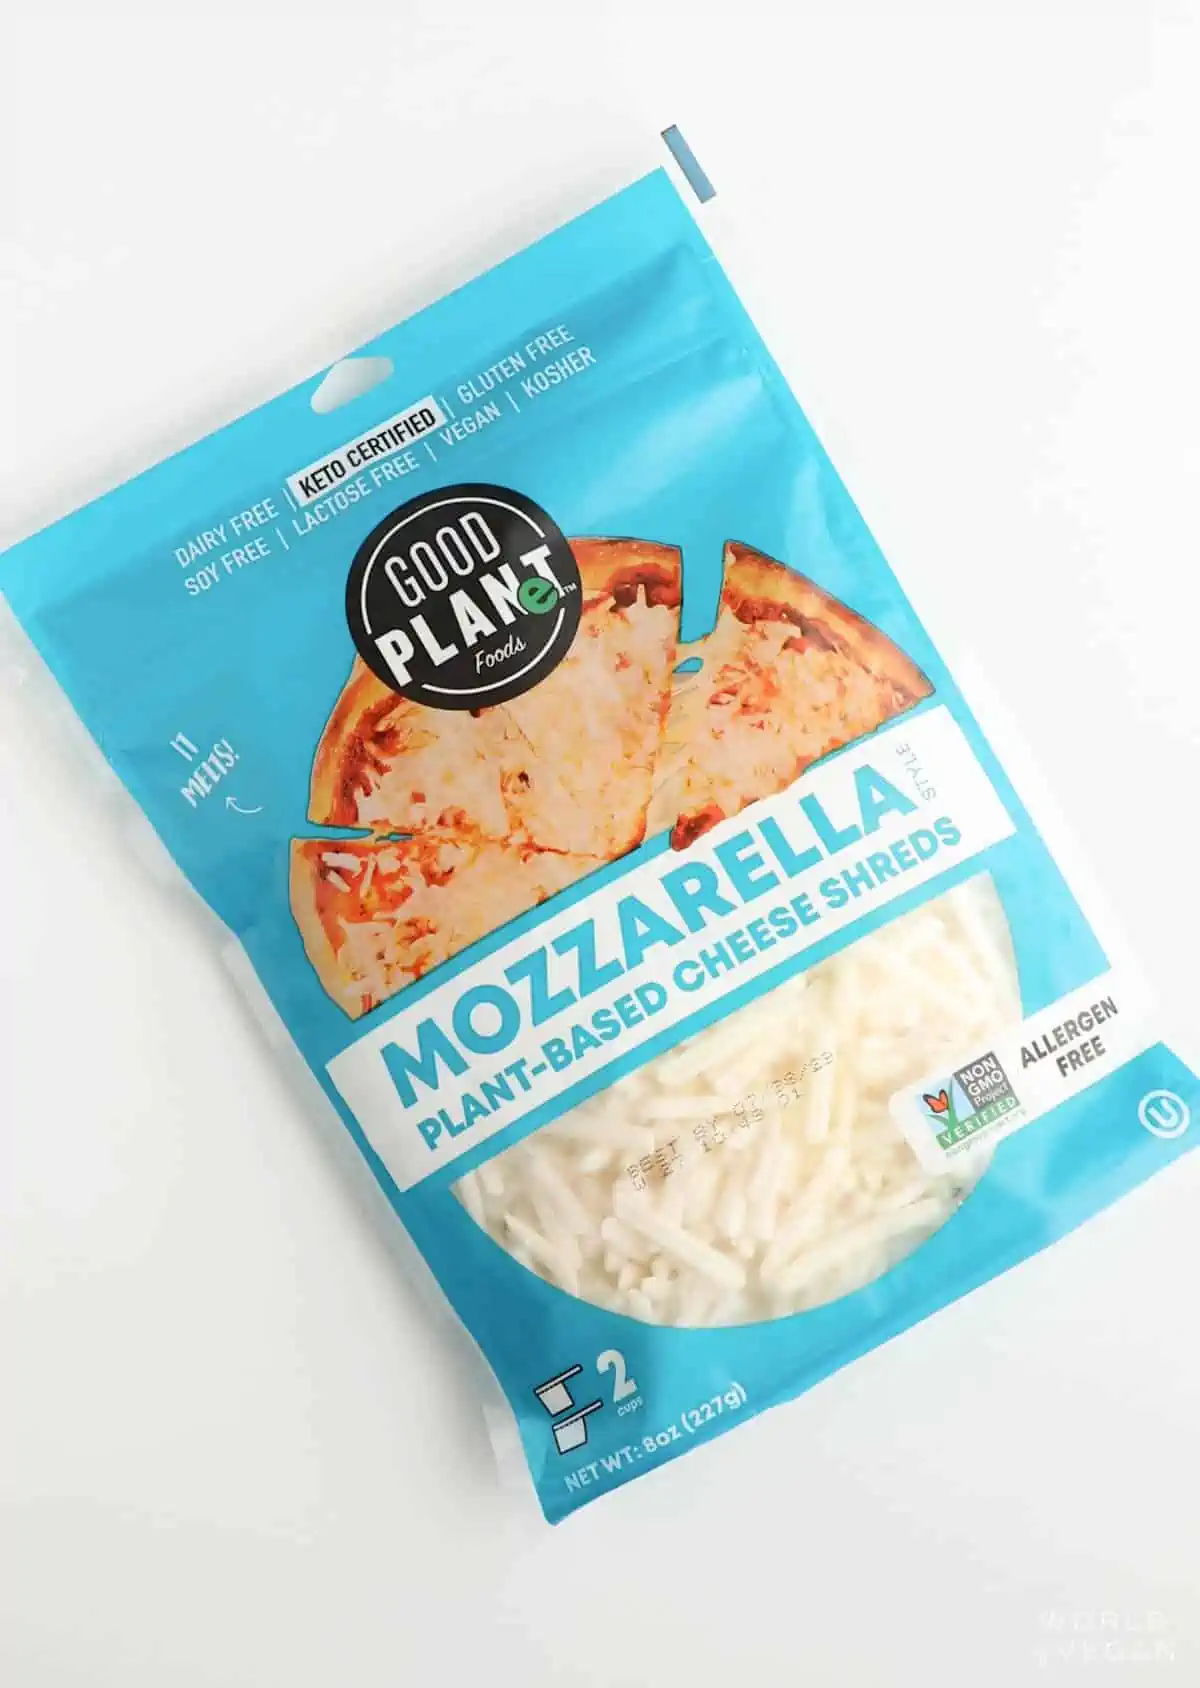 A bag of vegan mozzarella cheese from Good Planet.